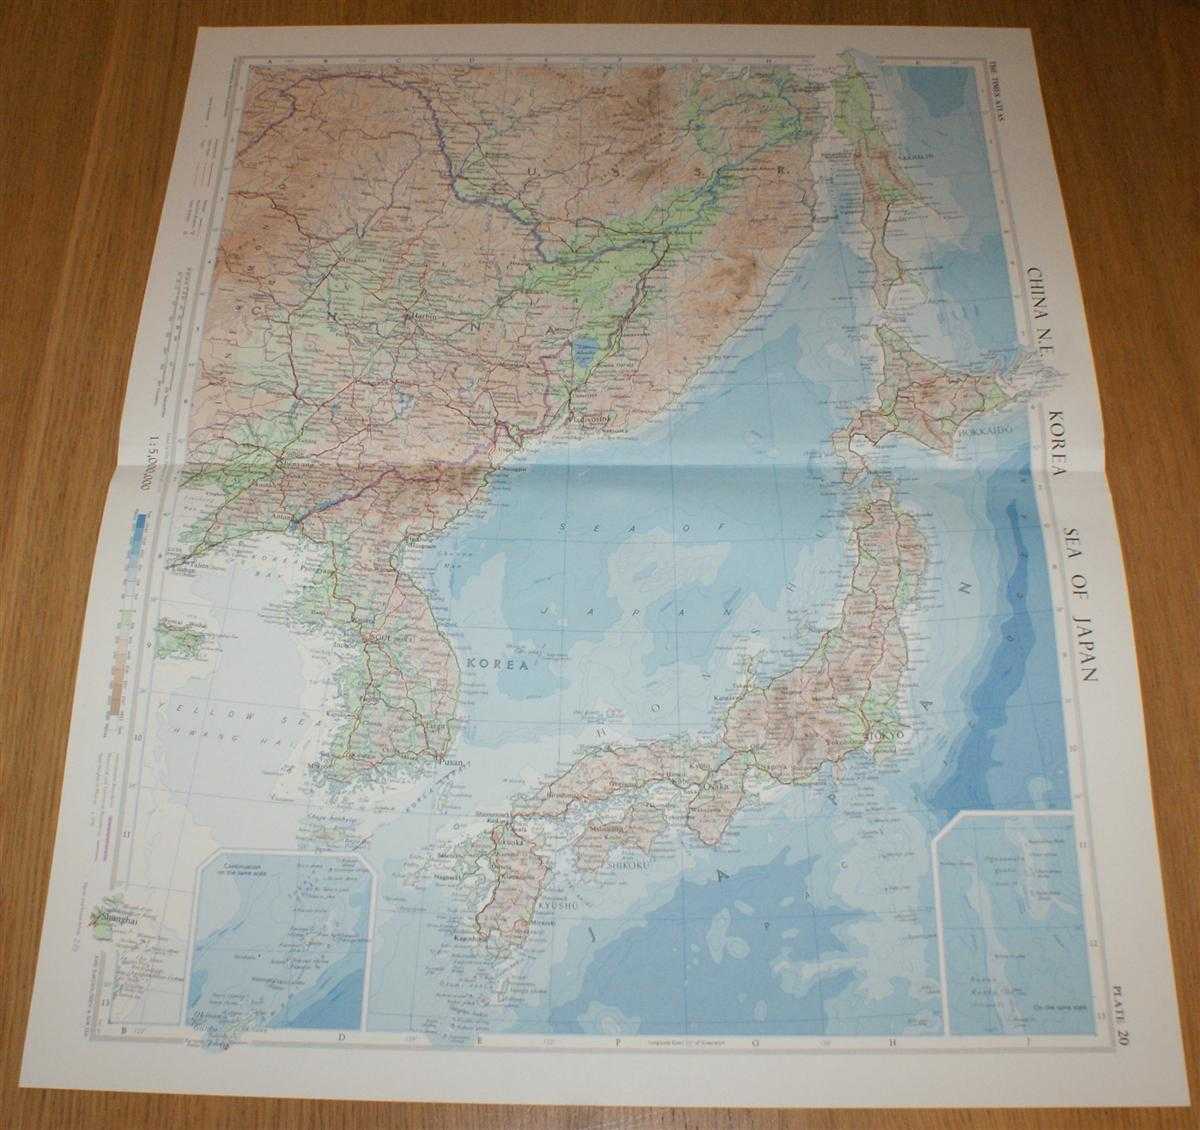 John Bartholomew - Map of North East China, Korea, Sea of Japan and Japan - Plate 20 disbound from 1958 Mid-Century Times Atlas of the World, including Vladivostock, Khabarovsk, Harbin, Pyongyang, Seoul, Pusan, Osaka and Tokyo